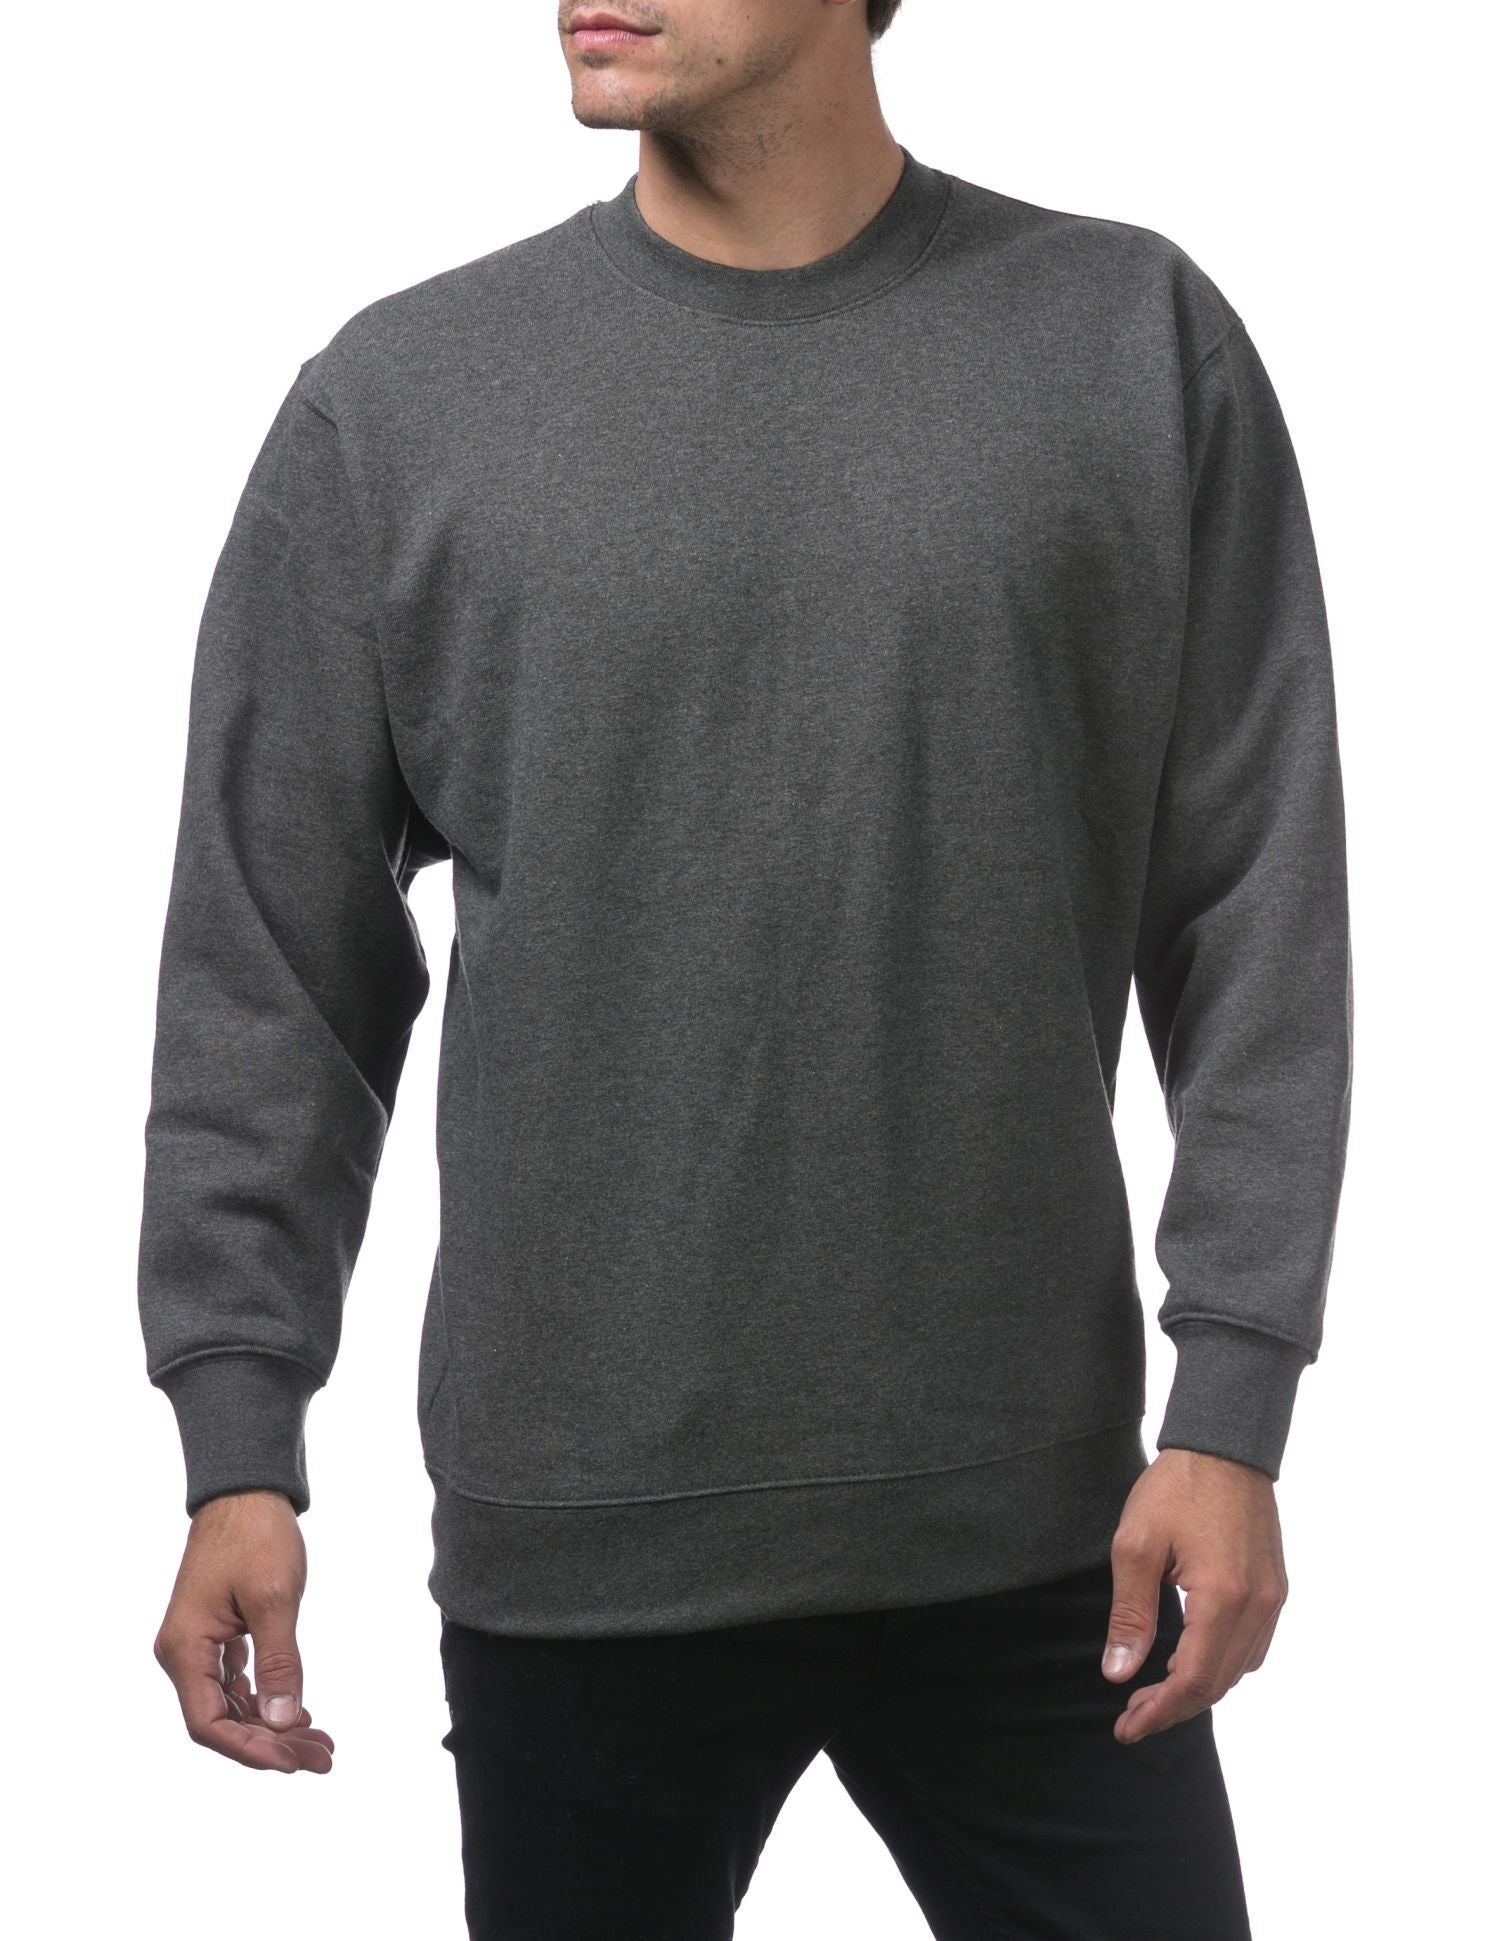 Pro Club Men's Comfort Crew Neck Fleece Pullover Sweater - Charcoal - Small - Pro-Distributing